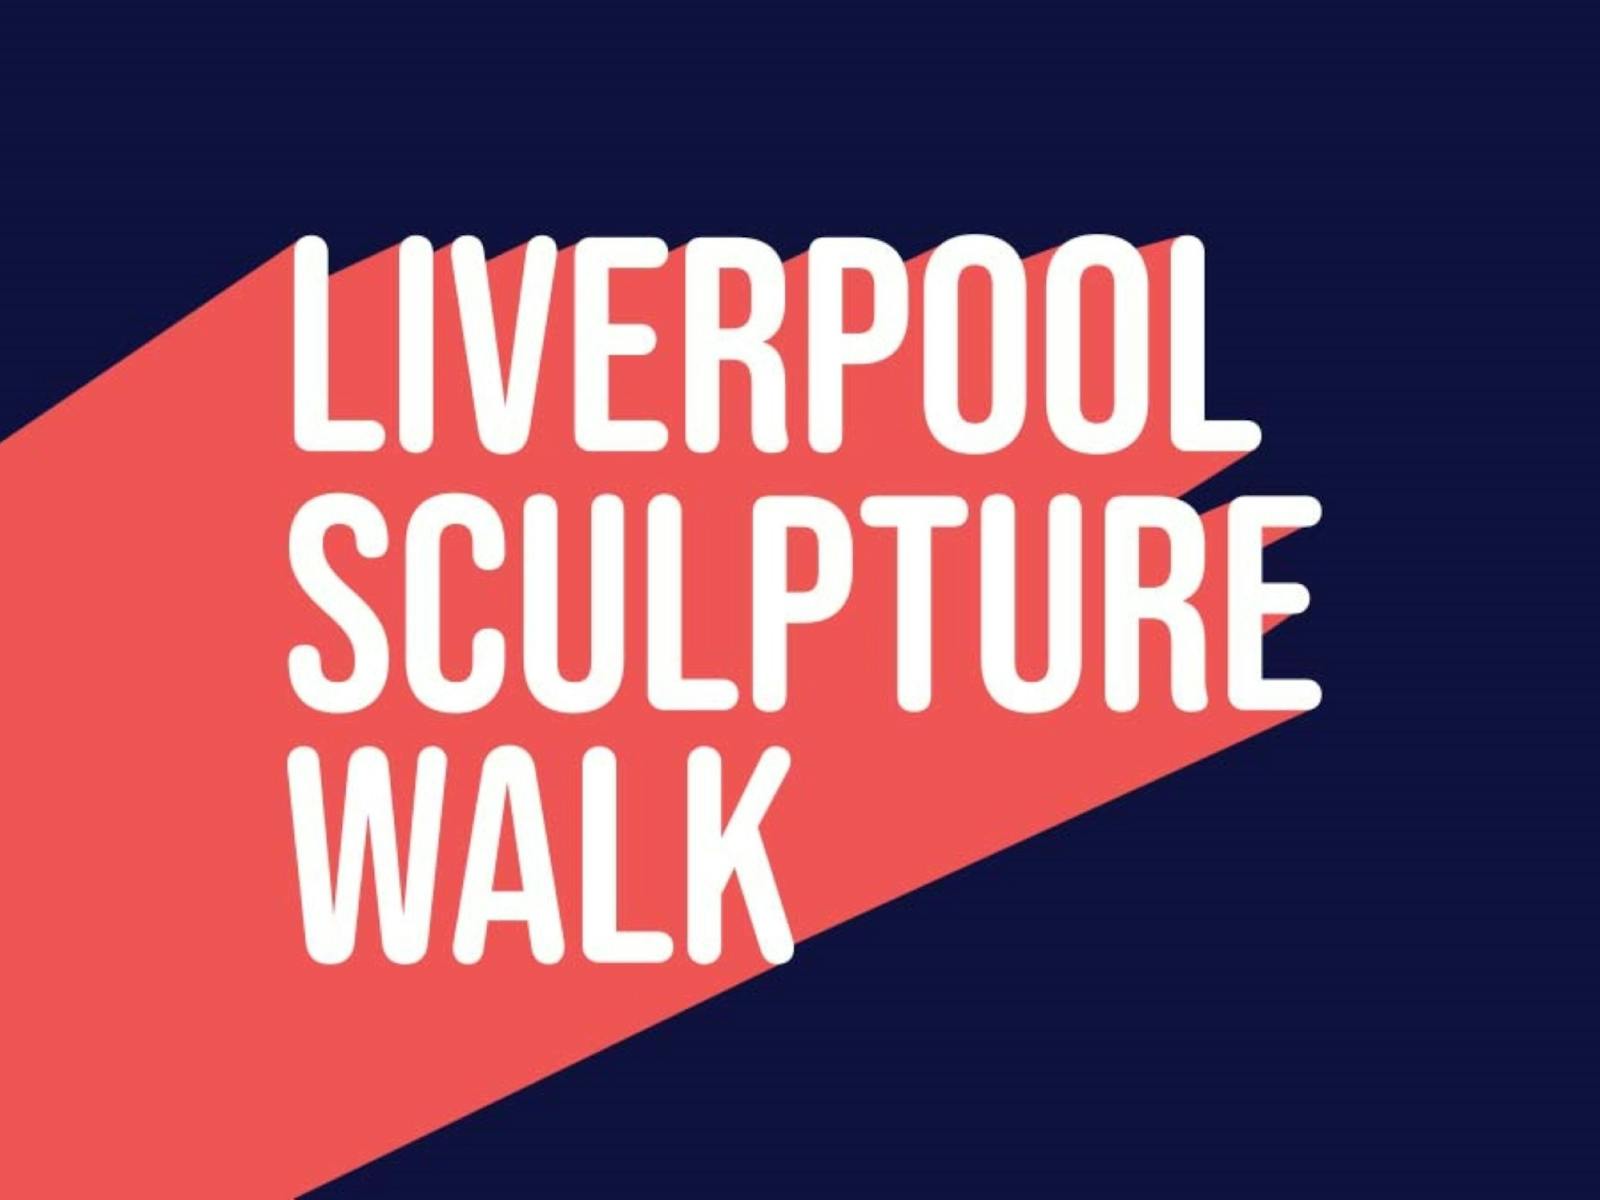 Image for Liverpool Sculpture Walk